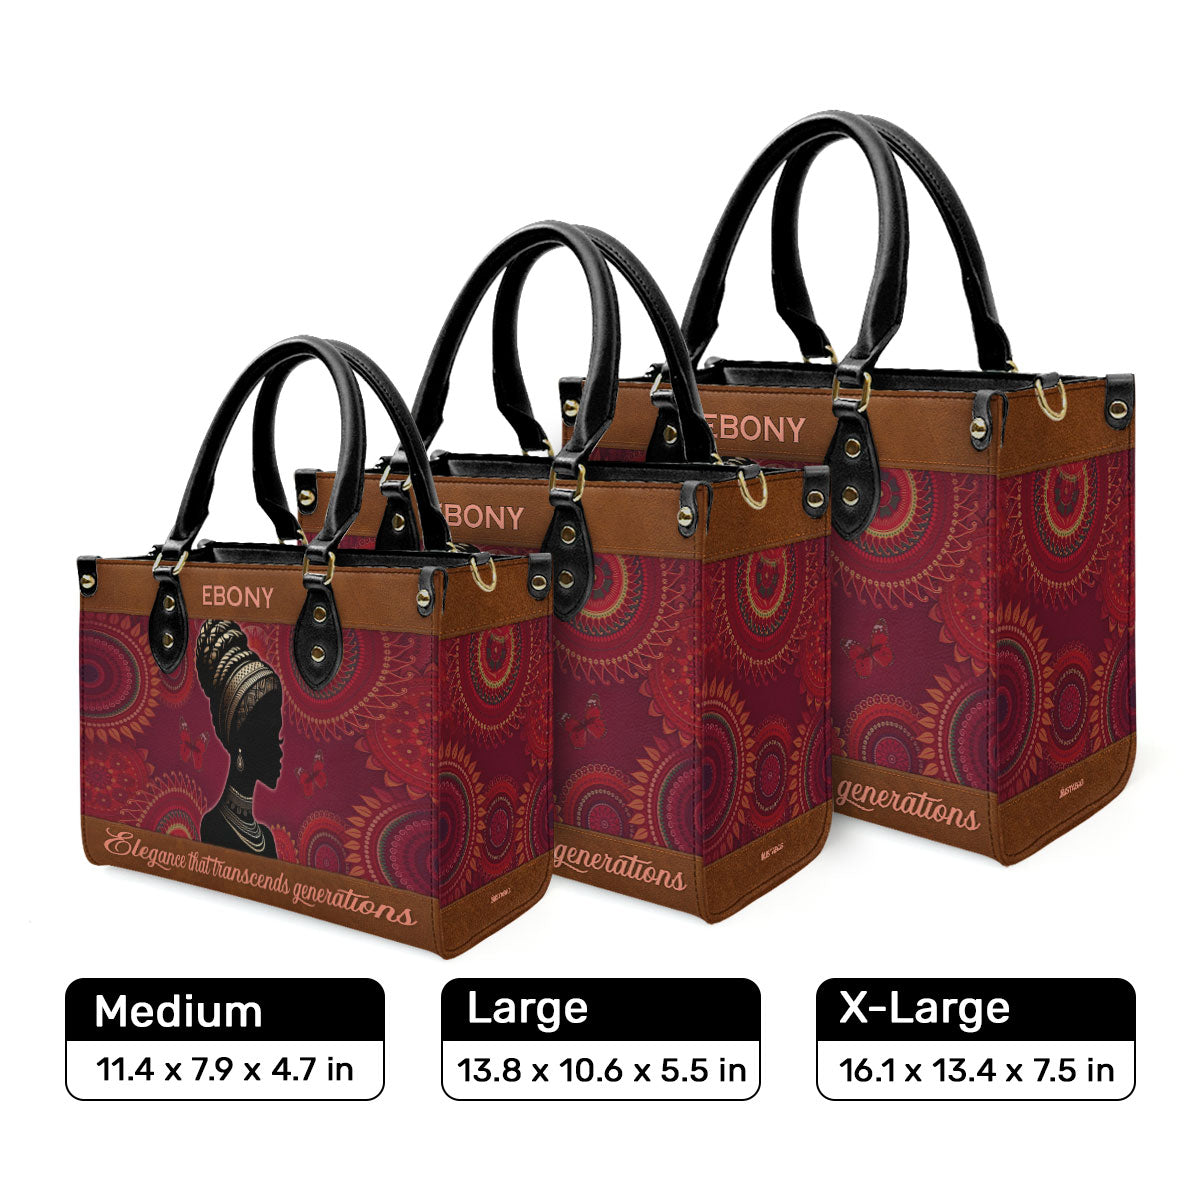 Elegance That Transcends Generations - Personalized Leather Handbag SB307